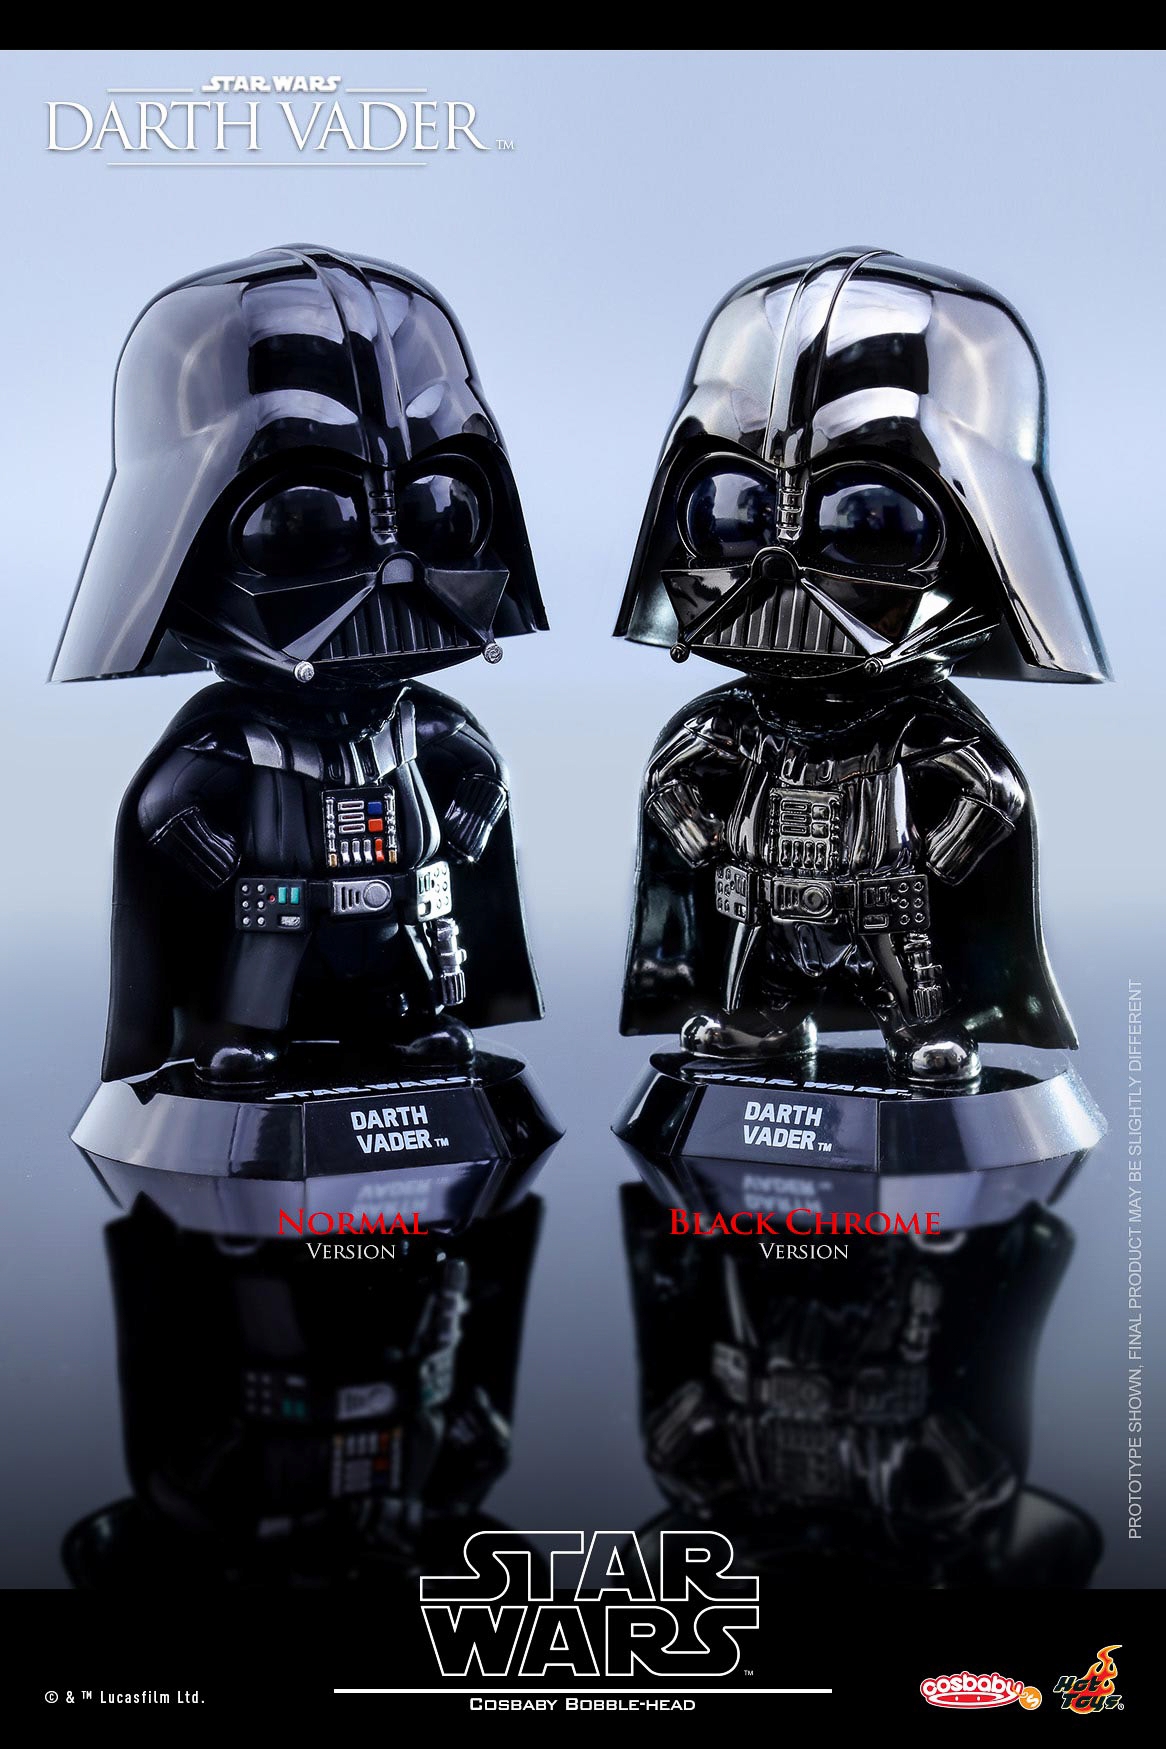 Hot-Toys-Star-Wars-Darth-Vader-Black-Chrome-Cosbaby-005.jpg